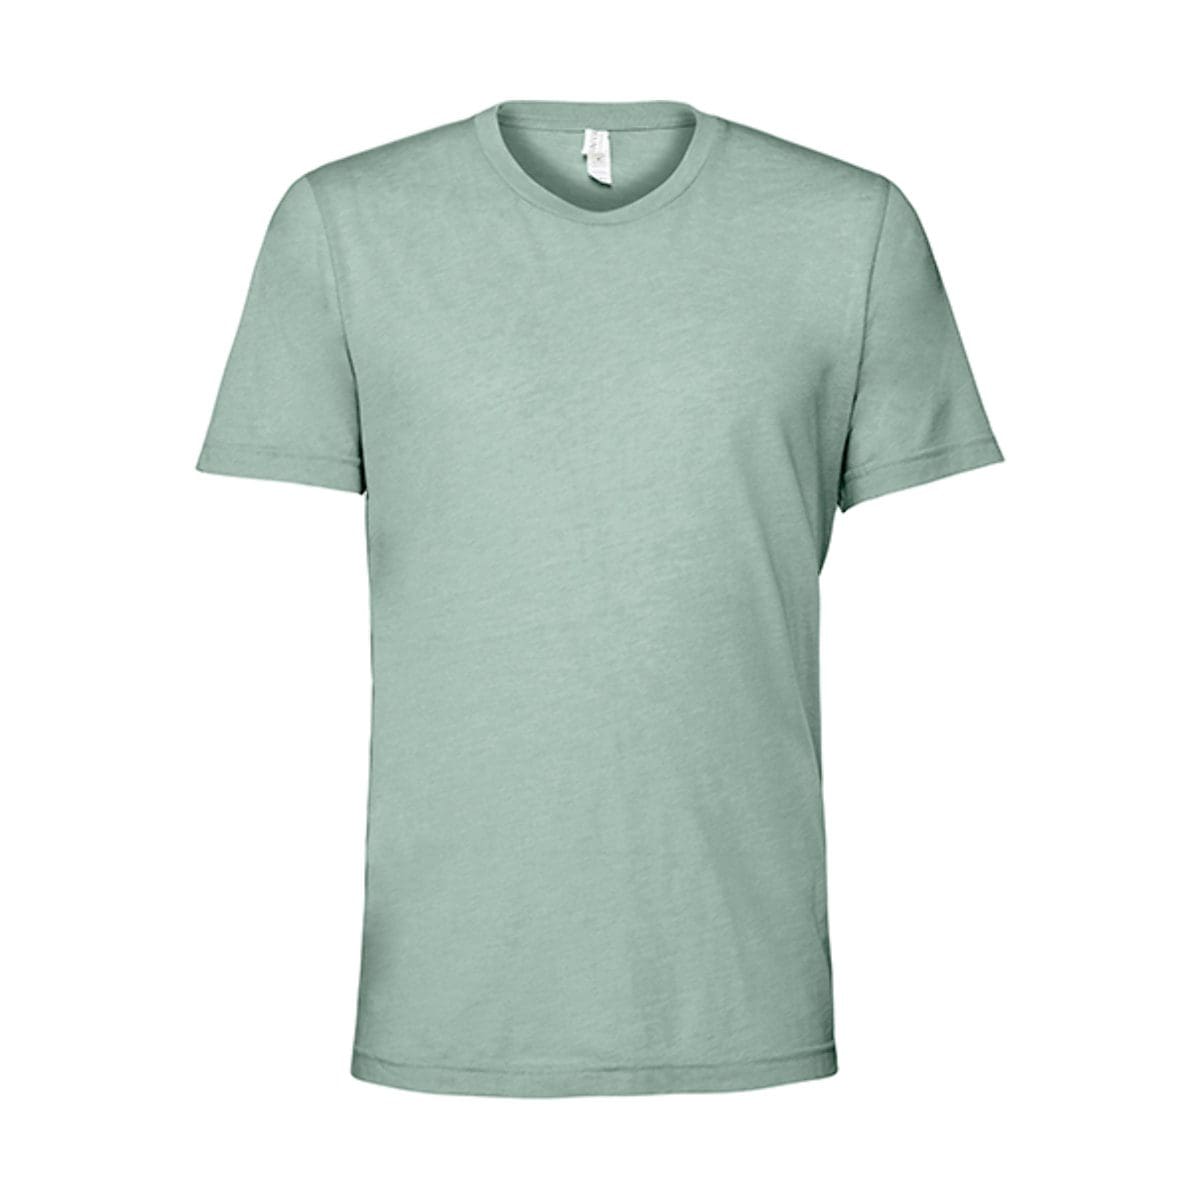 Unisex Triblend Neck T-Shirt Crew